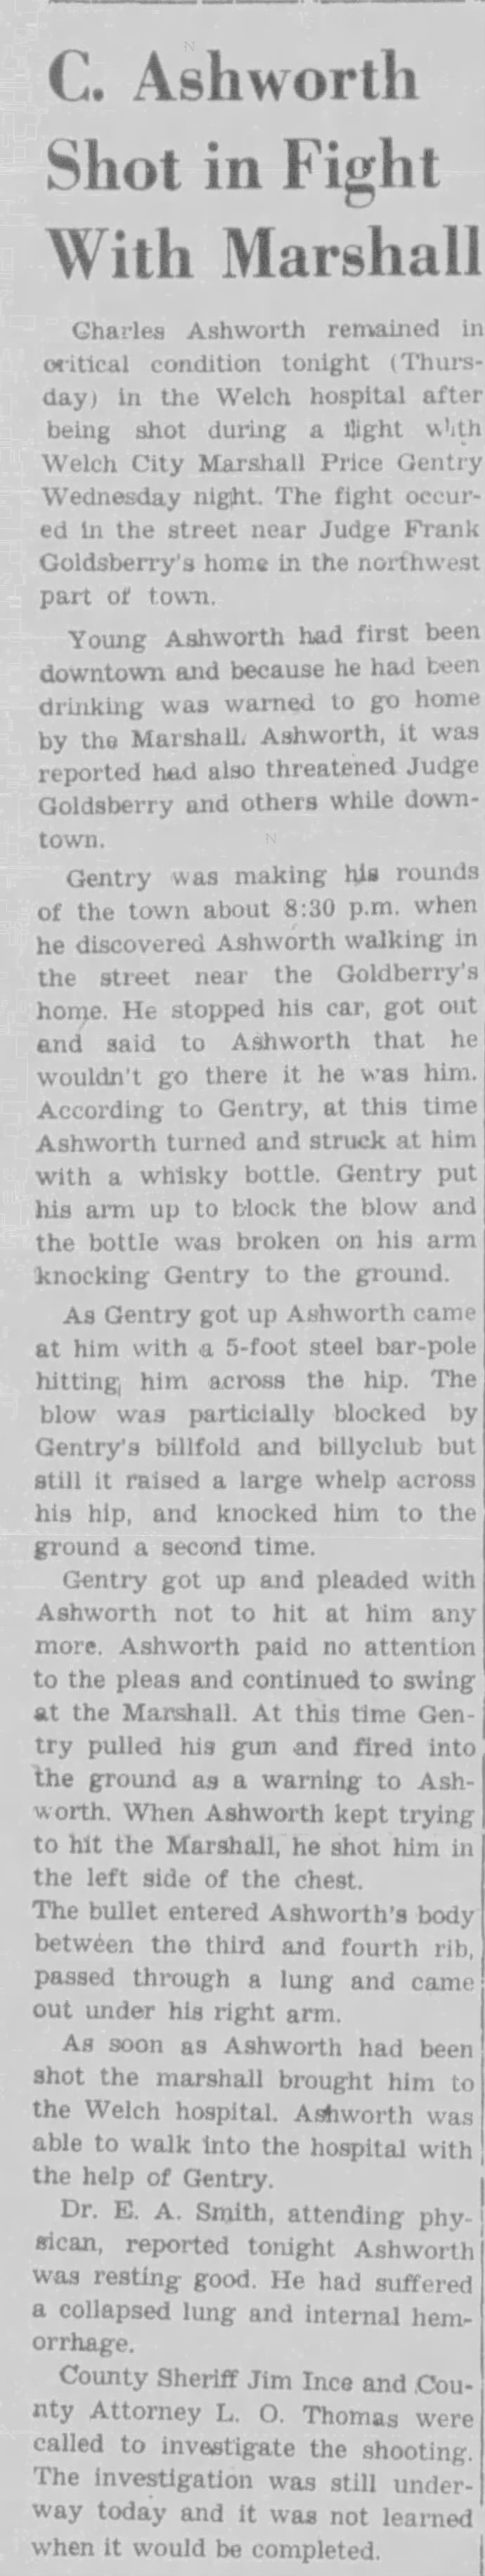 ashworth arrested